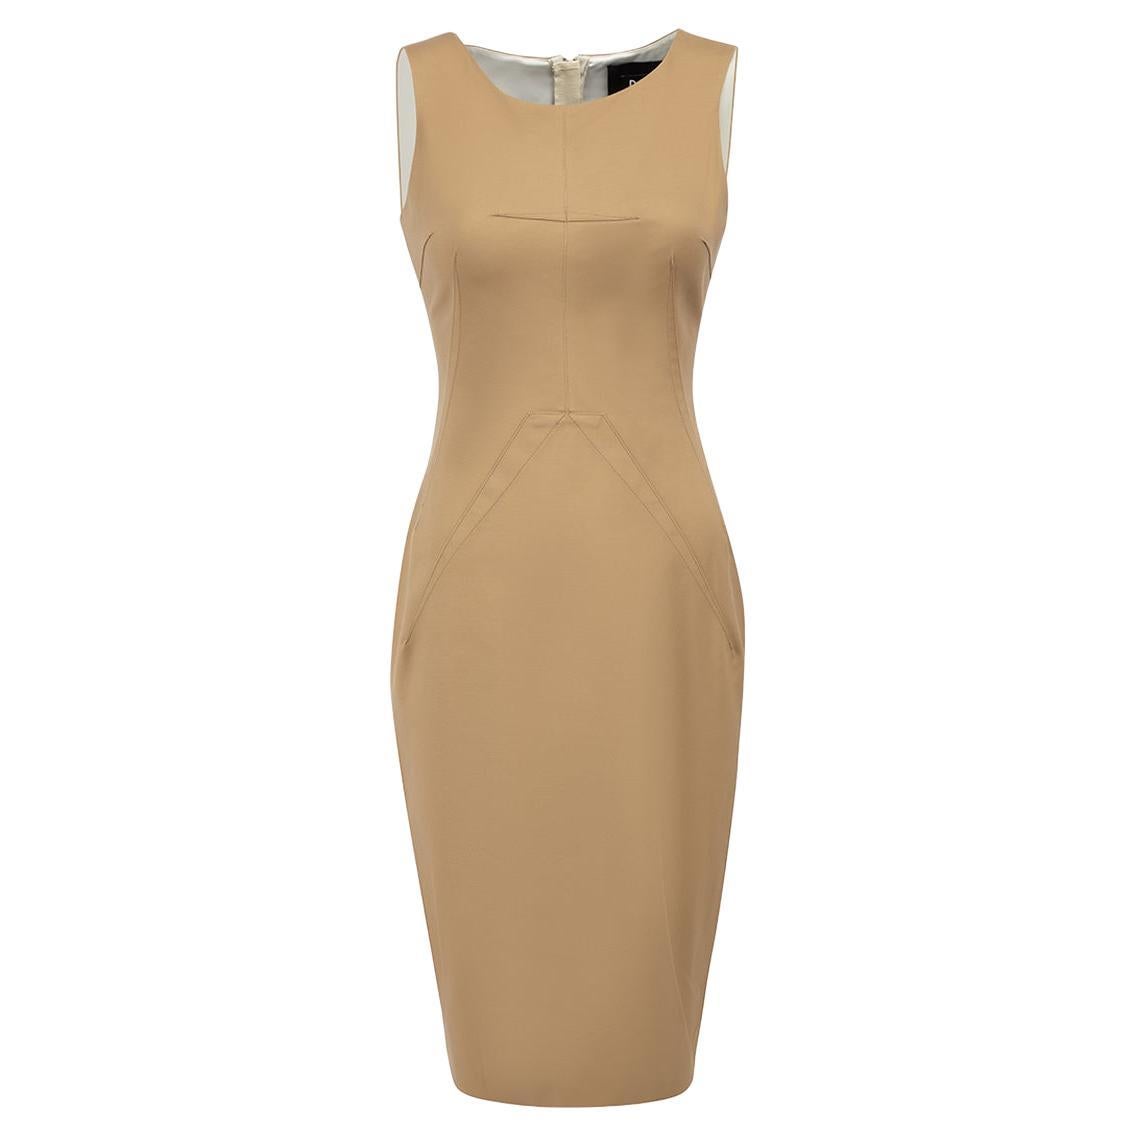 D&G Beige Midi Sleeveless Dress Size S